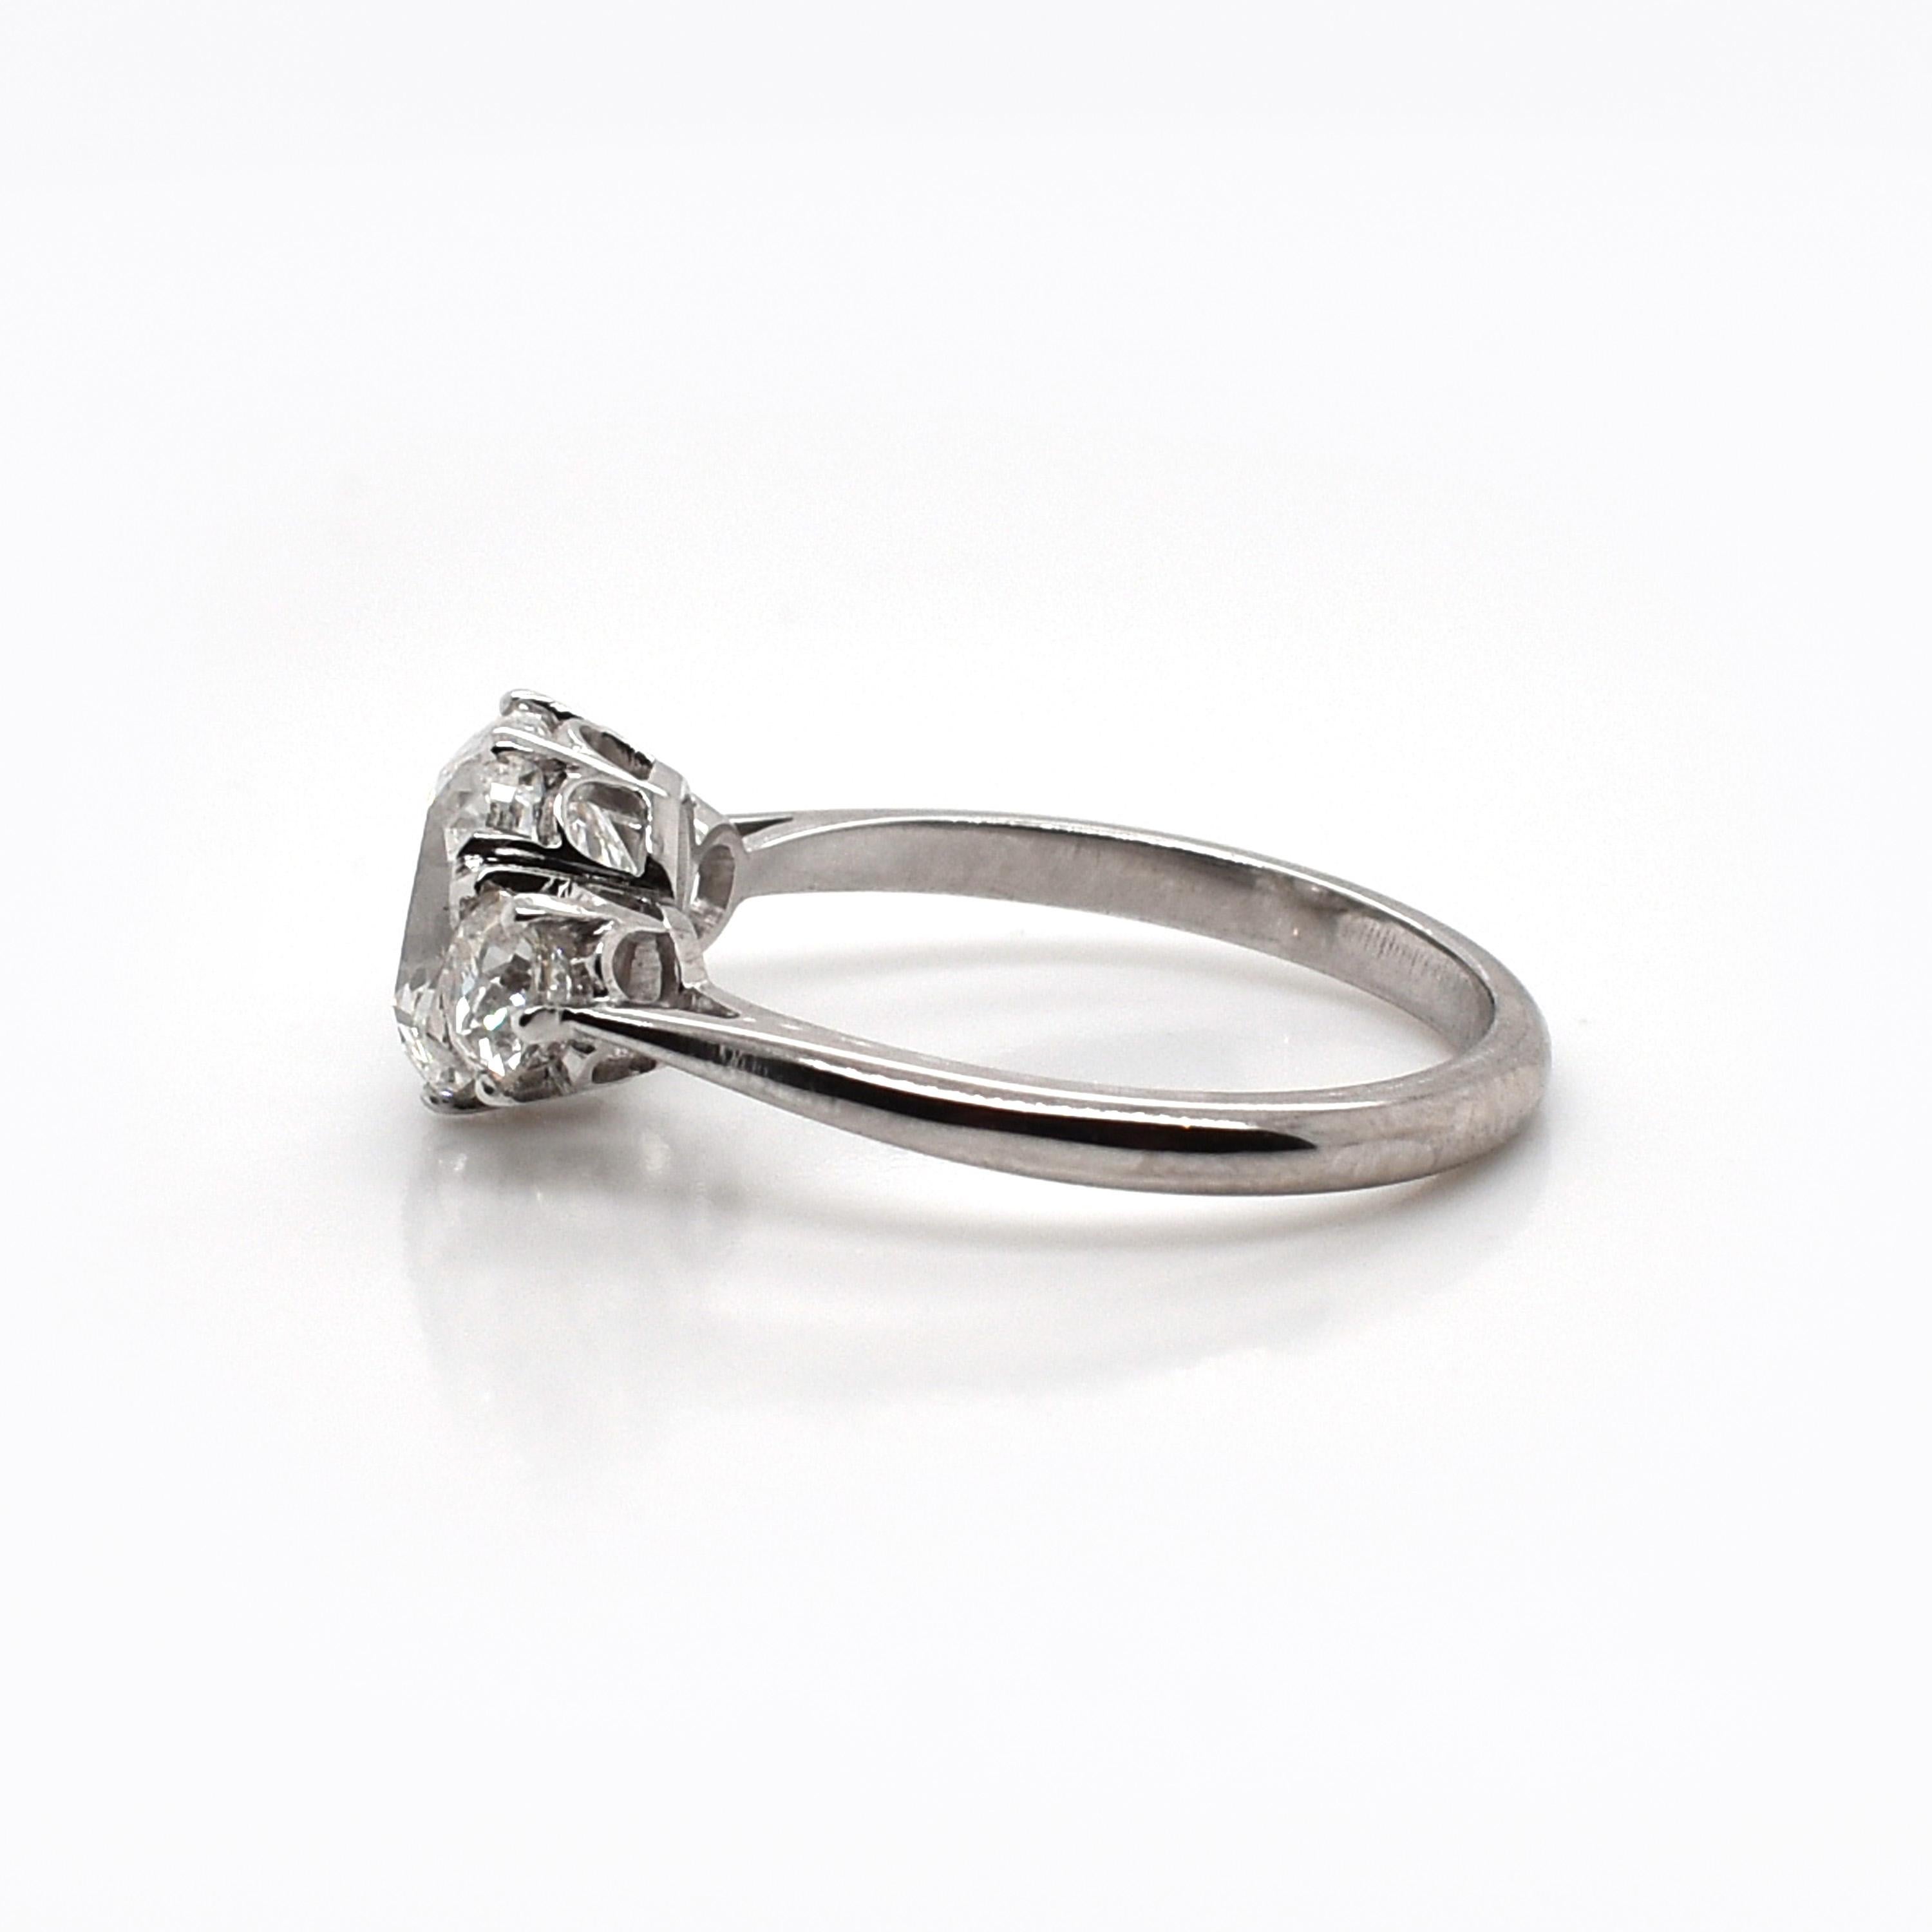 2.5 carat diamond ring